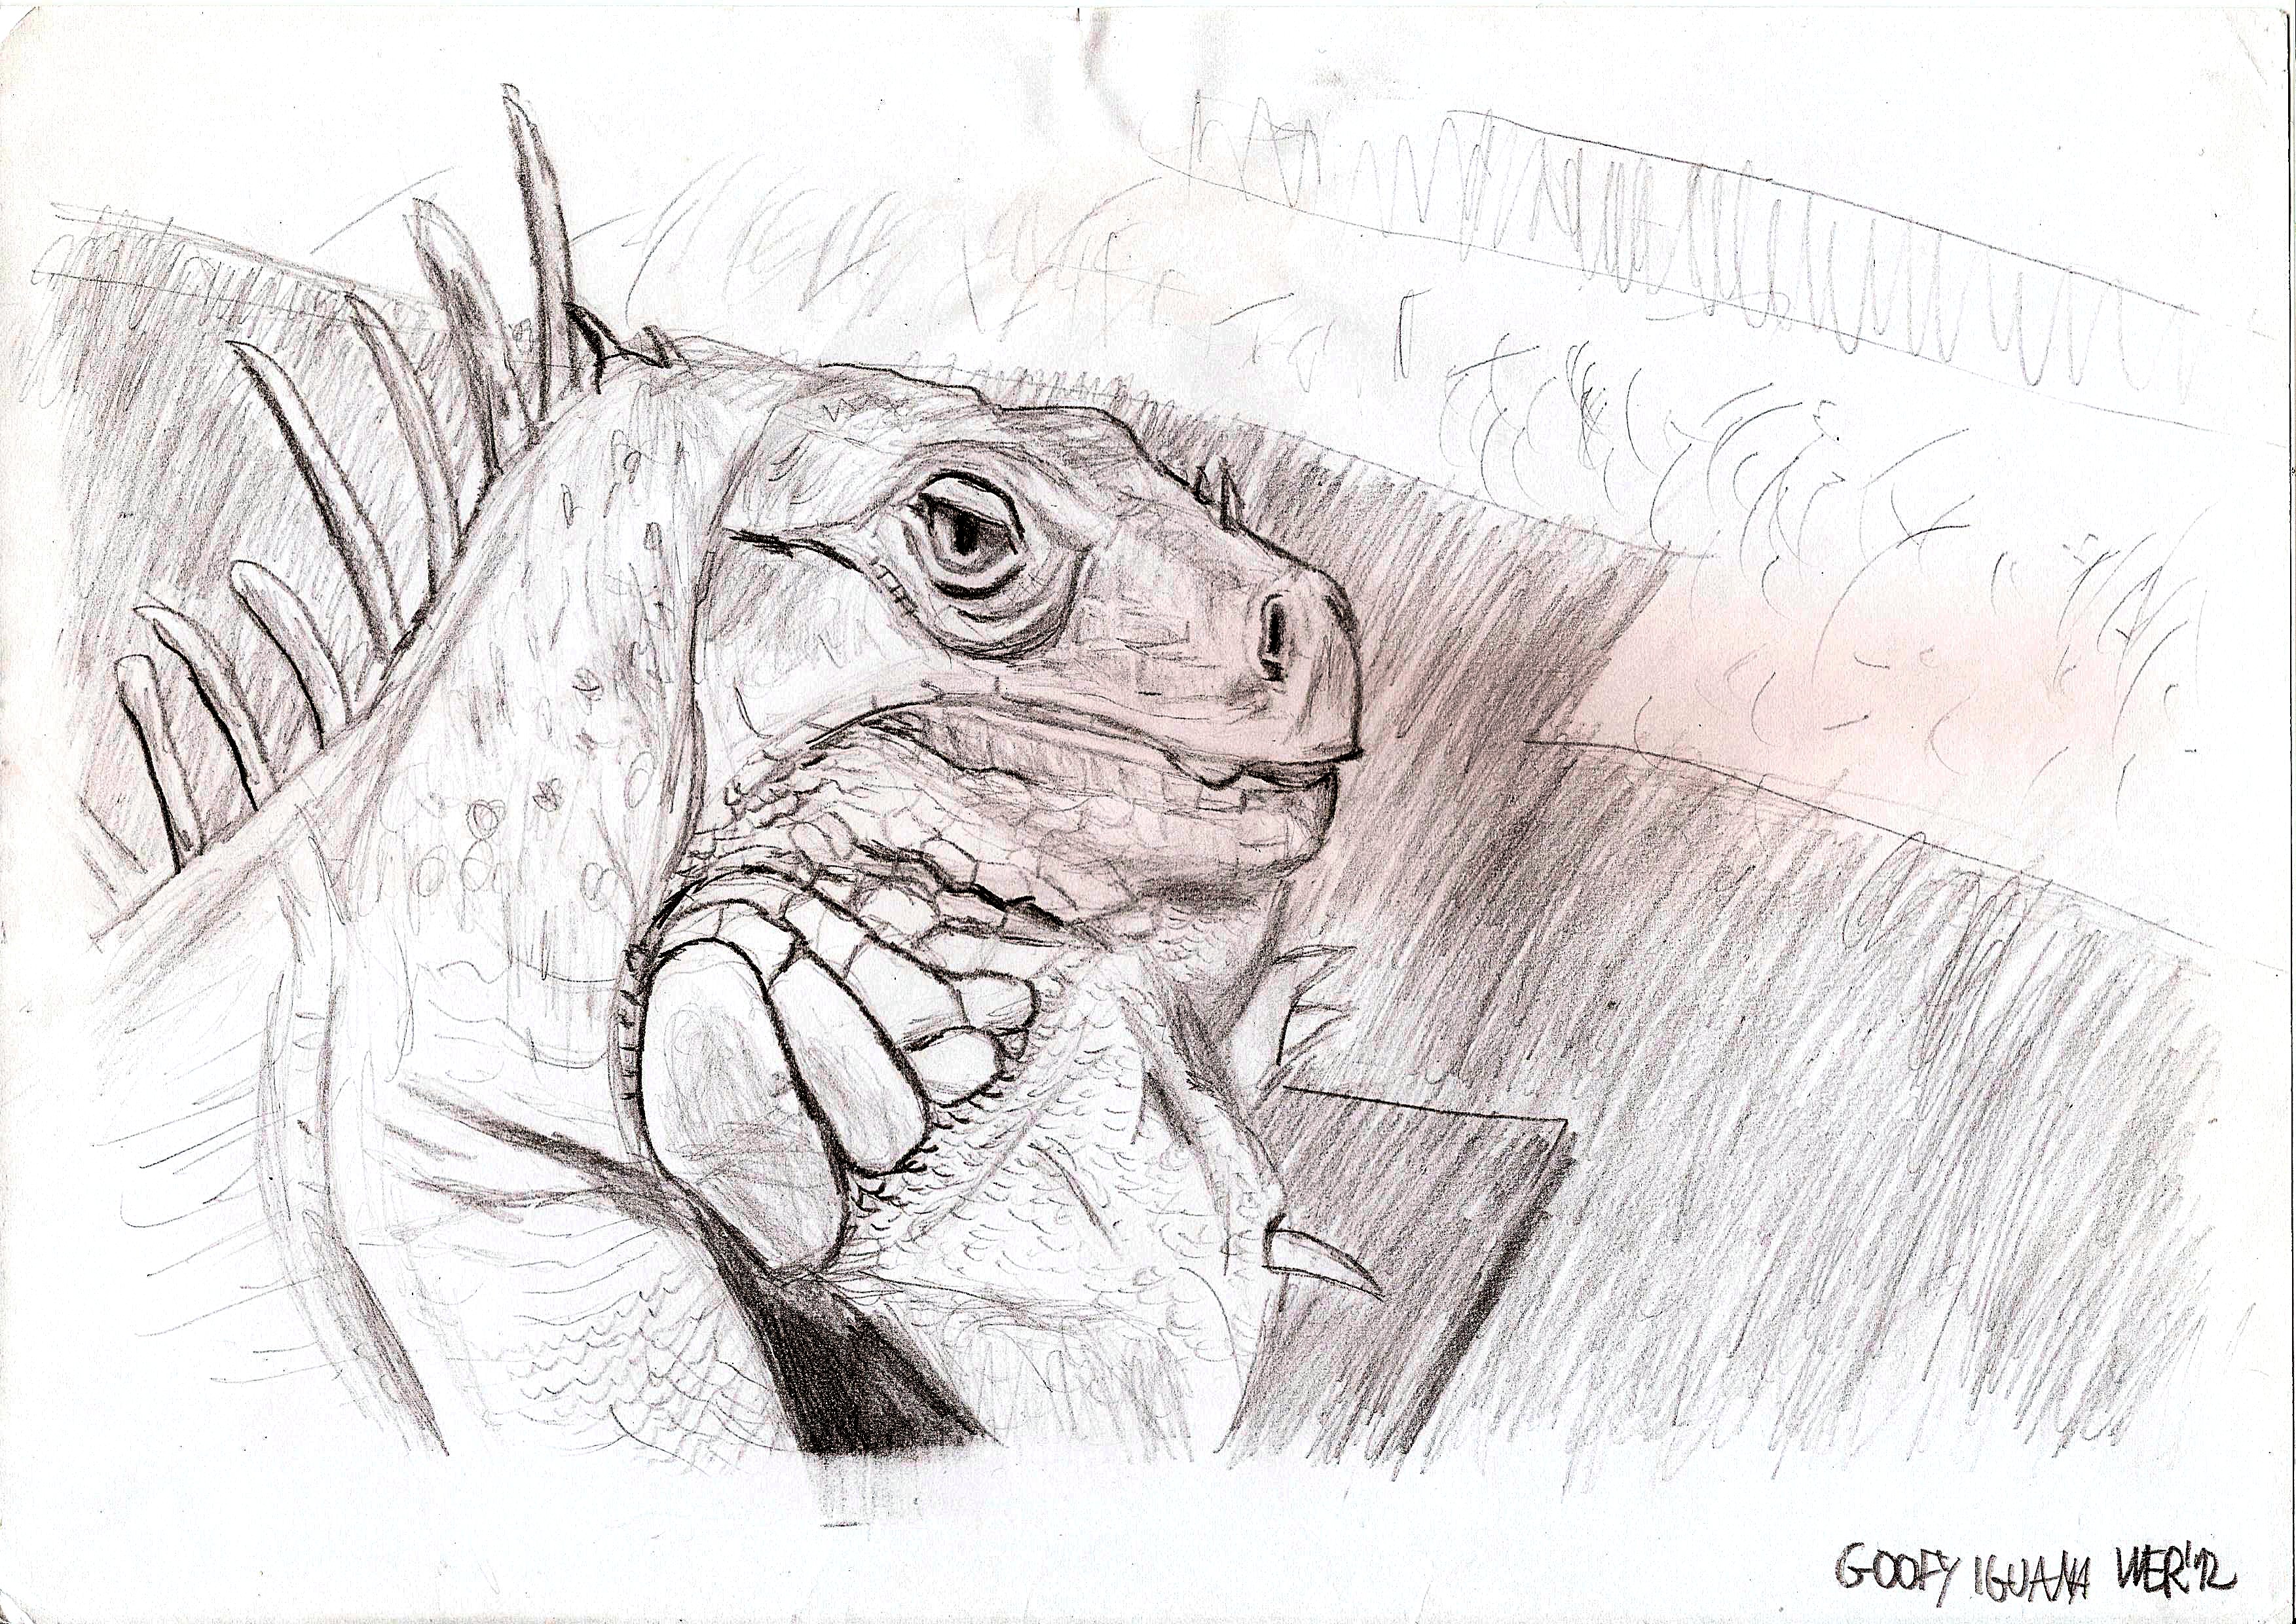 Goofy, the Iguana